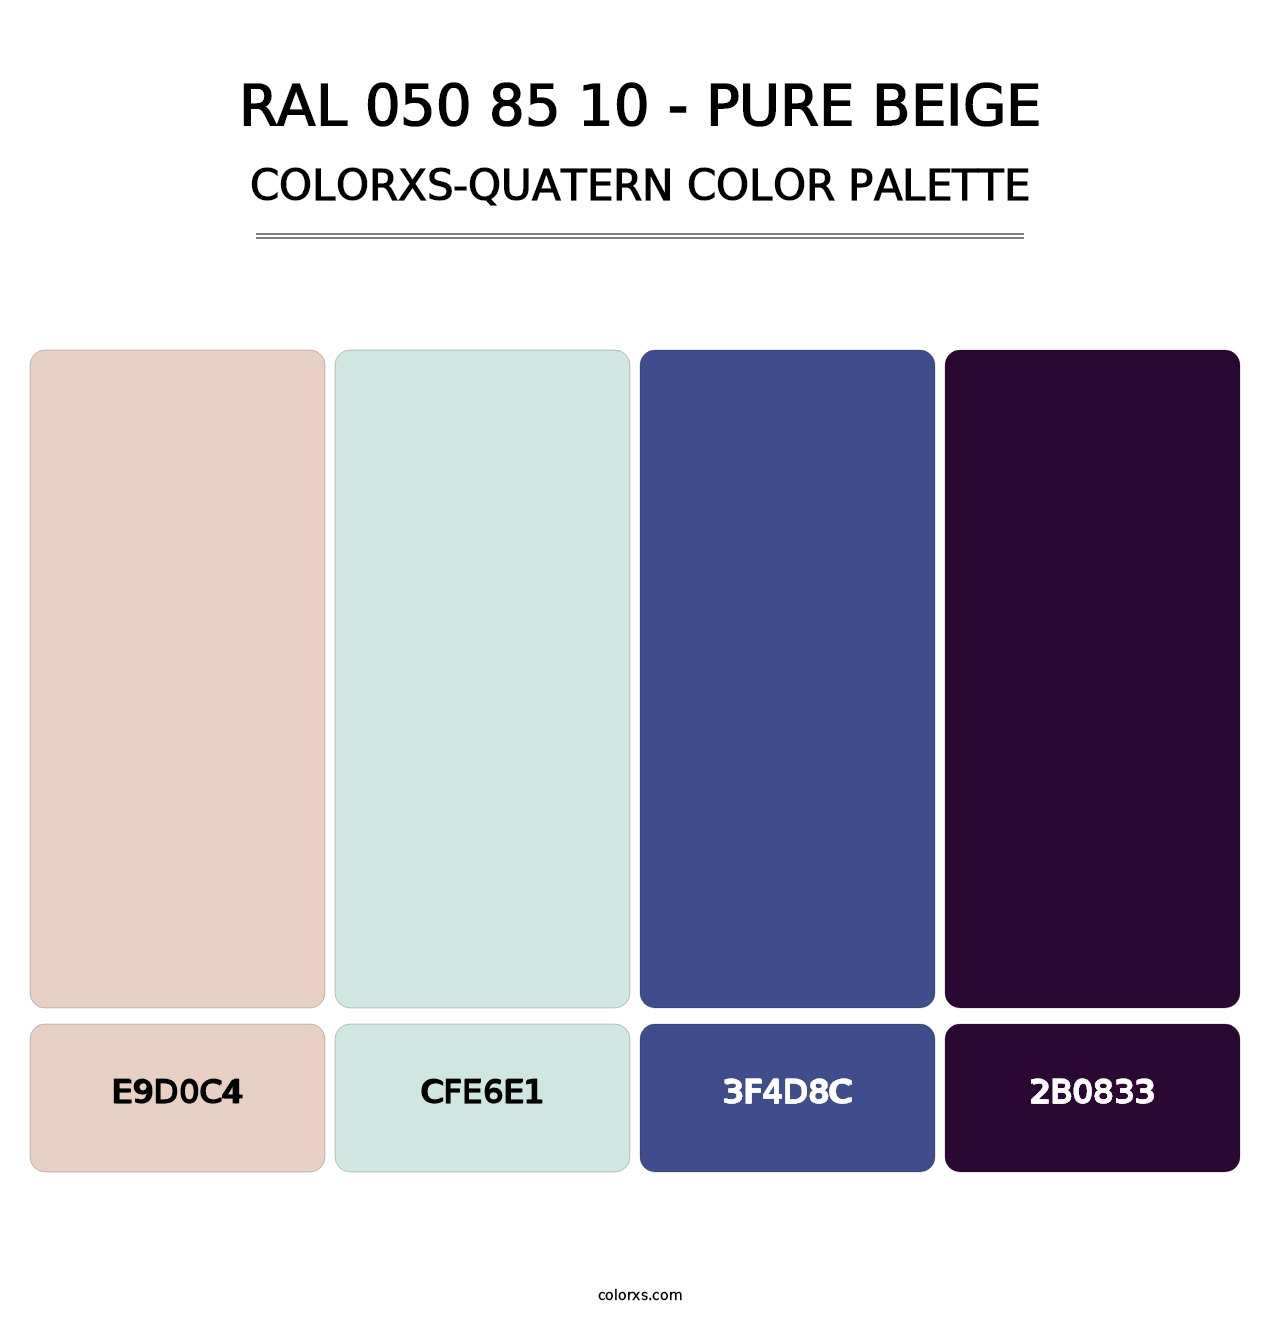 RAL 050 85 10 - Pure Beige - Colorxs Quatern Palette